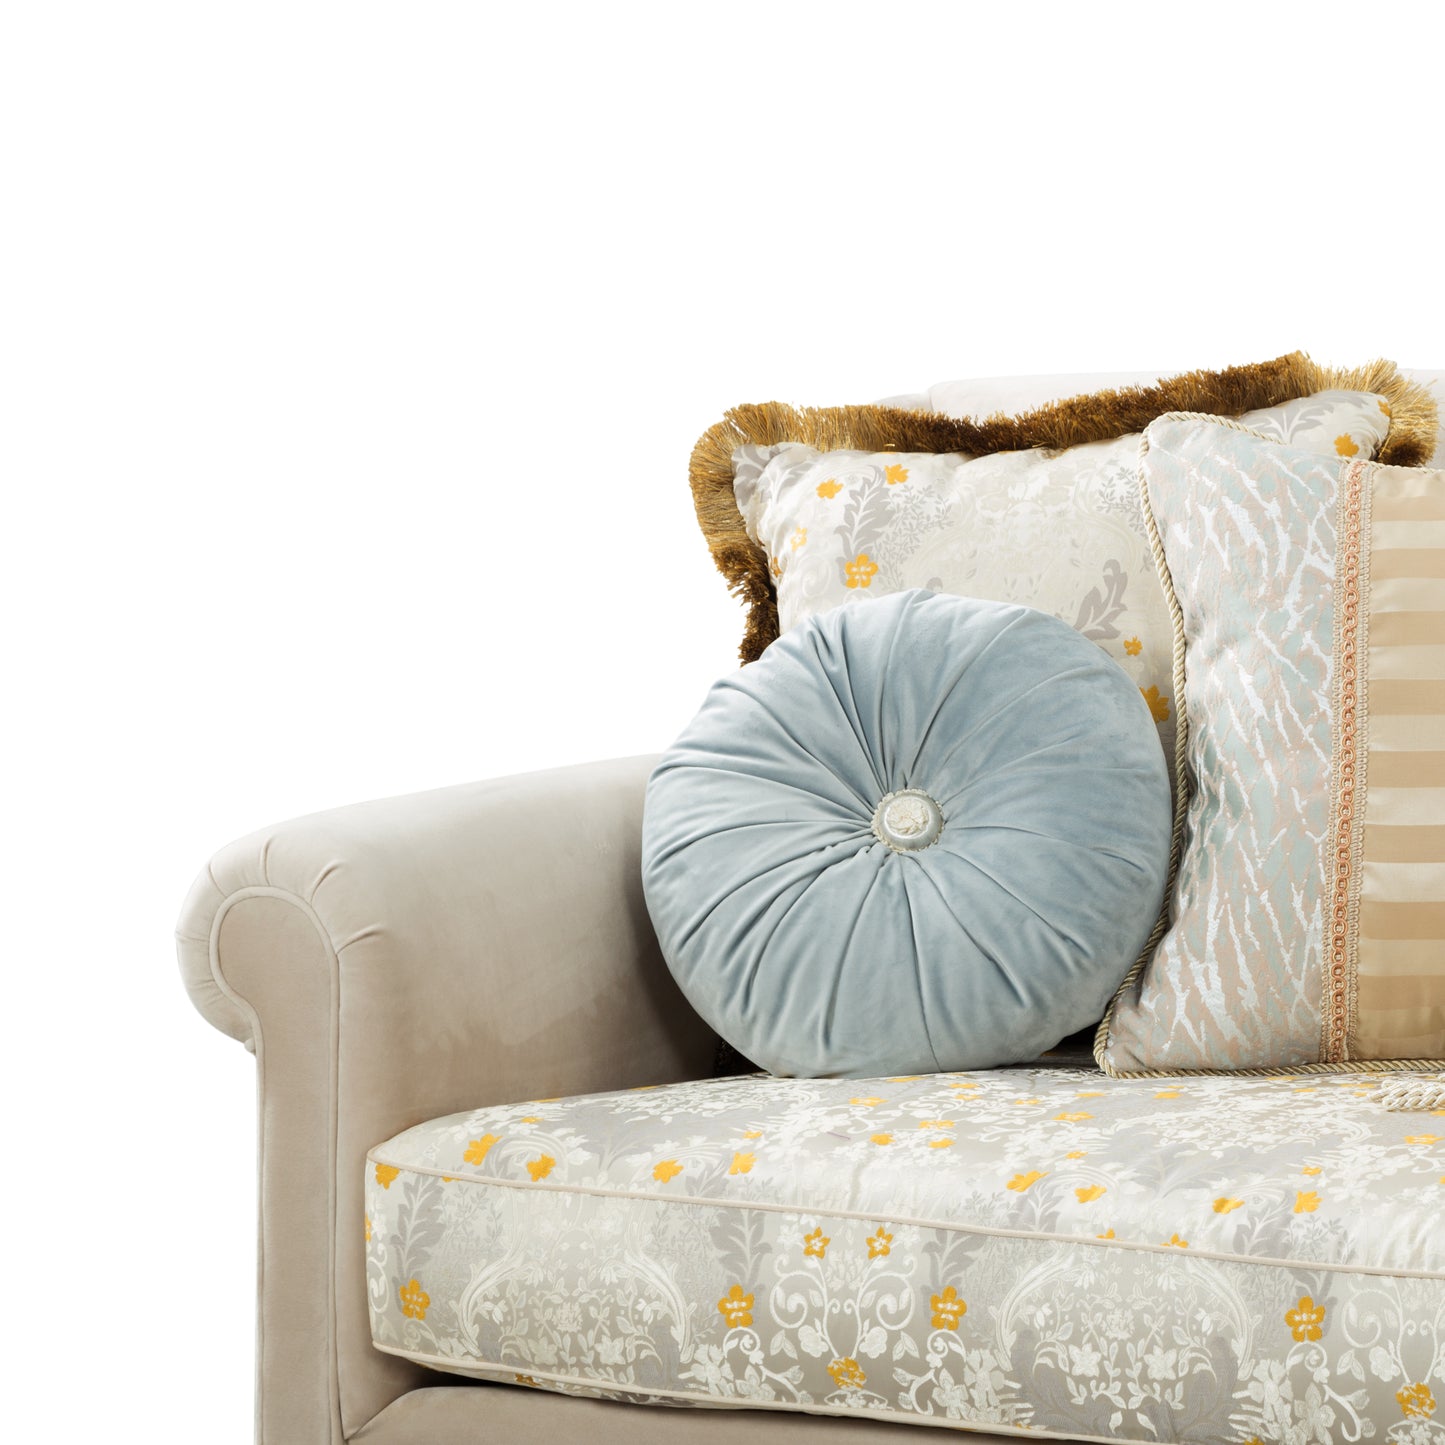 3-Piece Living Room Set: Elegant, Sofa and Loveseat